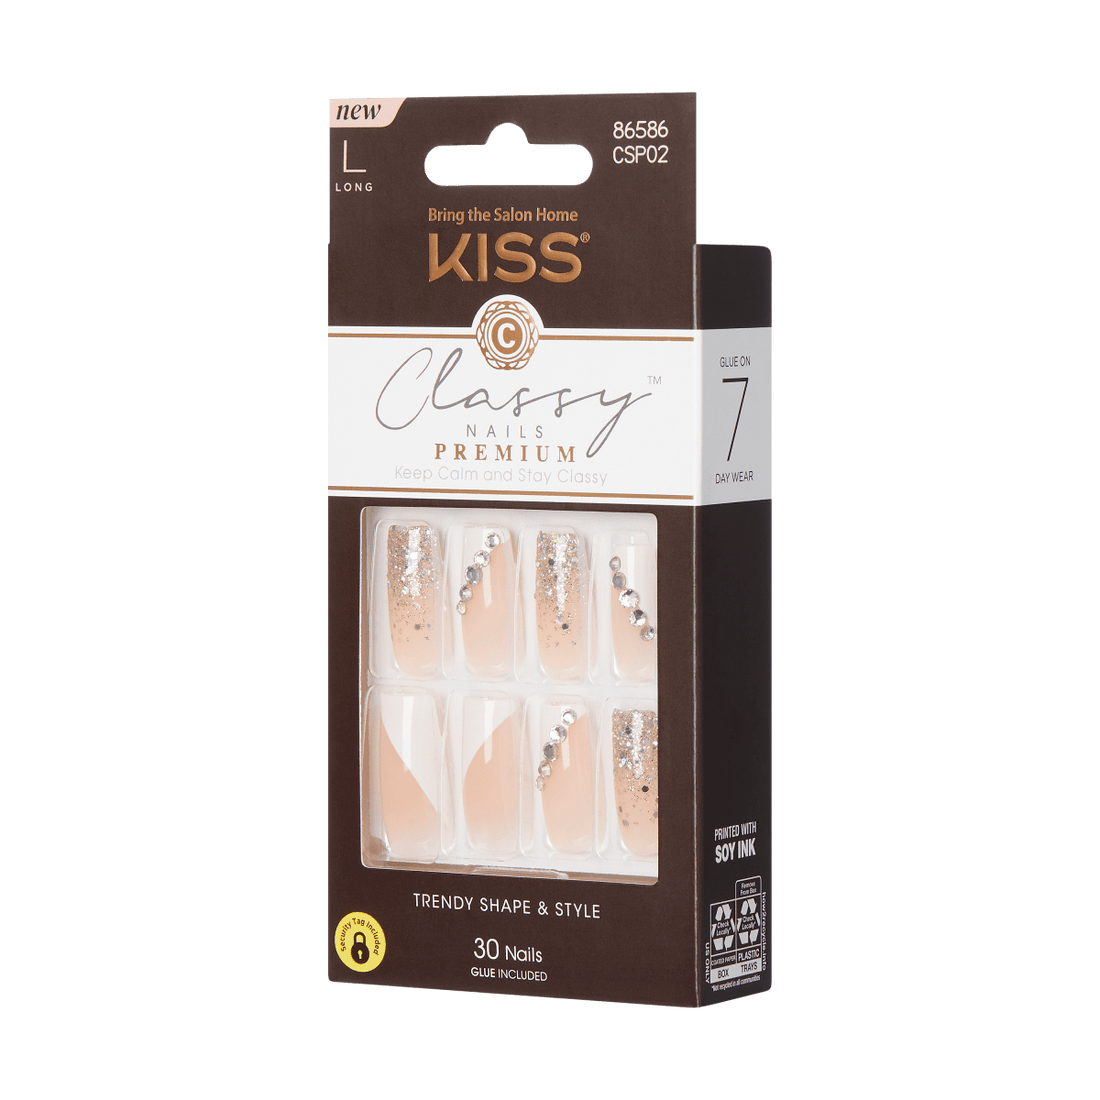 KISS Classy Nails Premium, Press-On Nails, Gorgeous, White, Long Square, 30ct